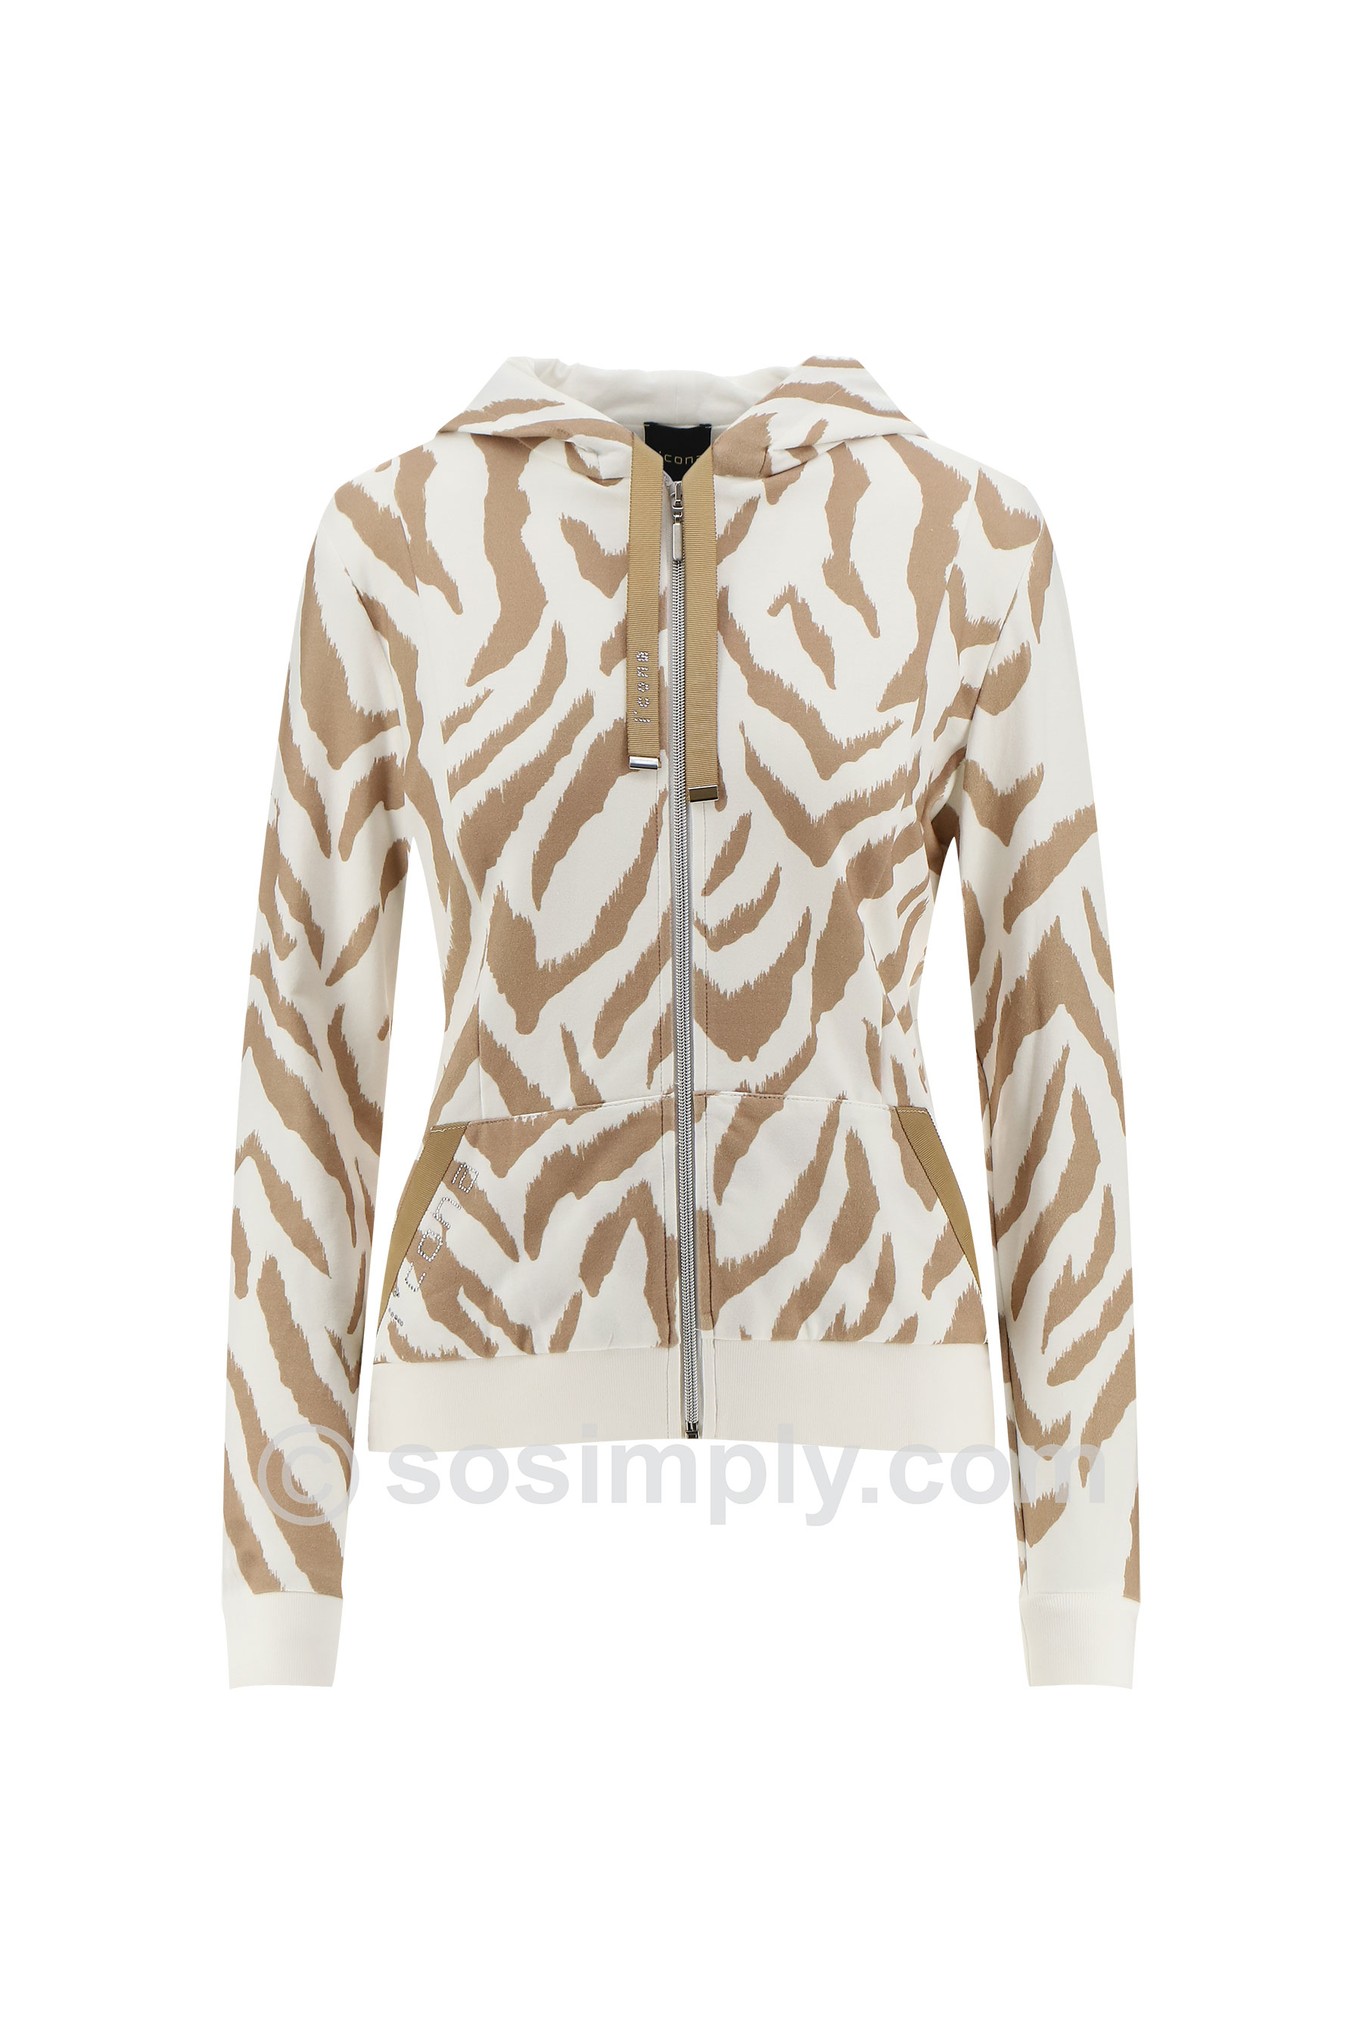 I’cona Luxe Zebra Print Zip Up Hooded Jacket